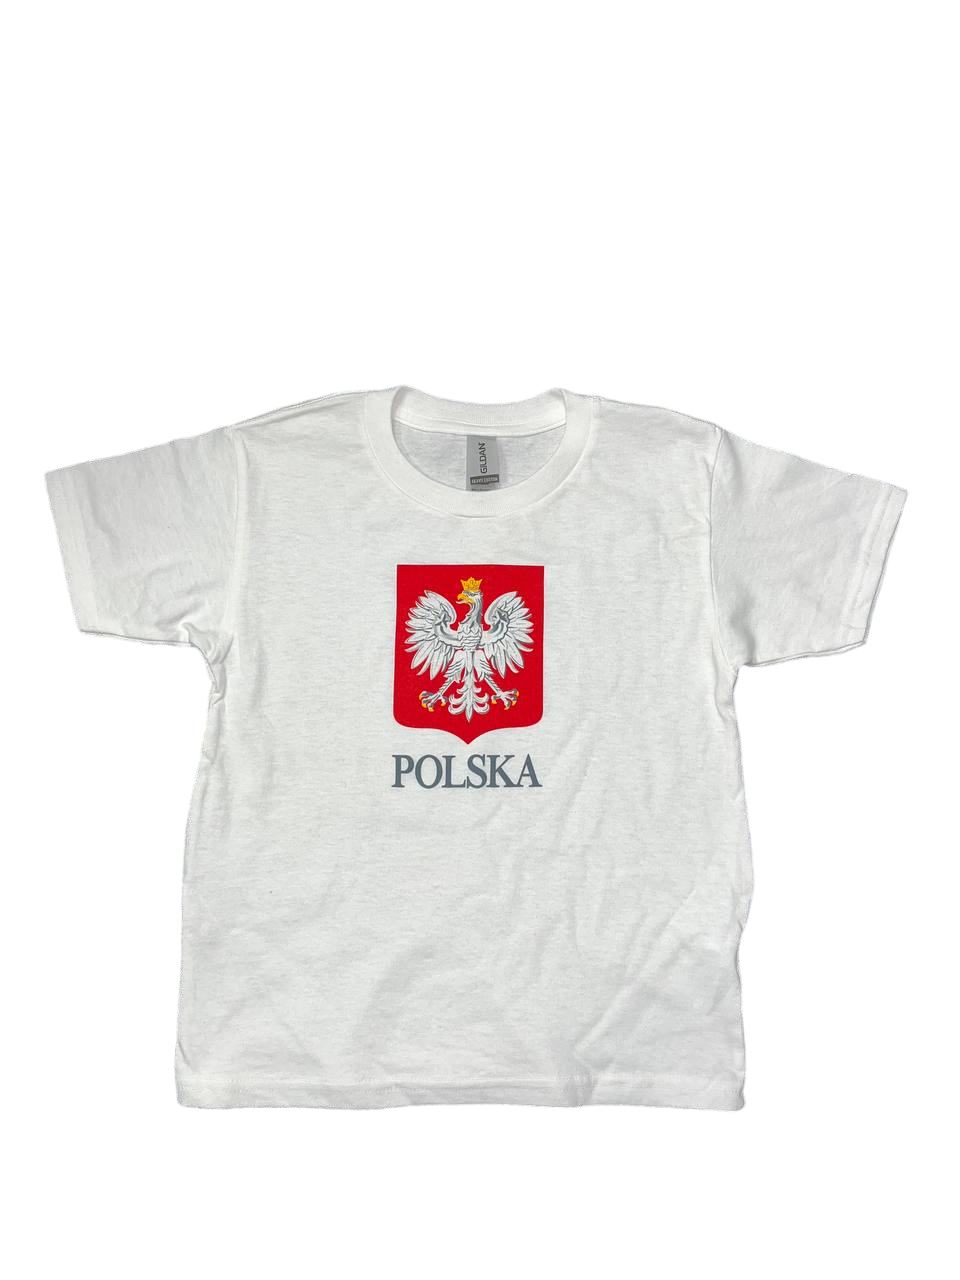 Bulk Of Polish Kids T-Shirt With Eagle Polska and Sign 15 Pack White